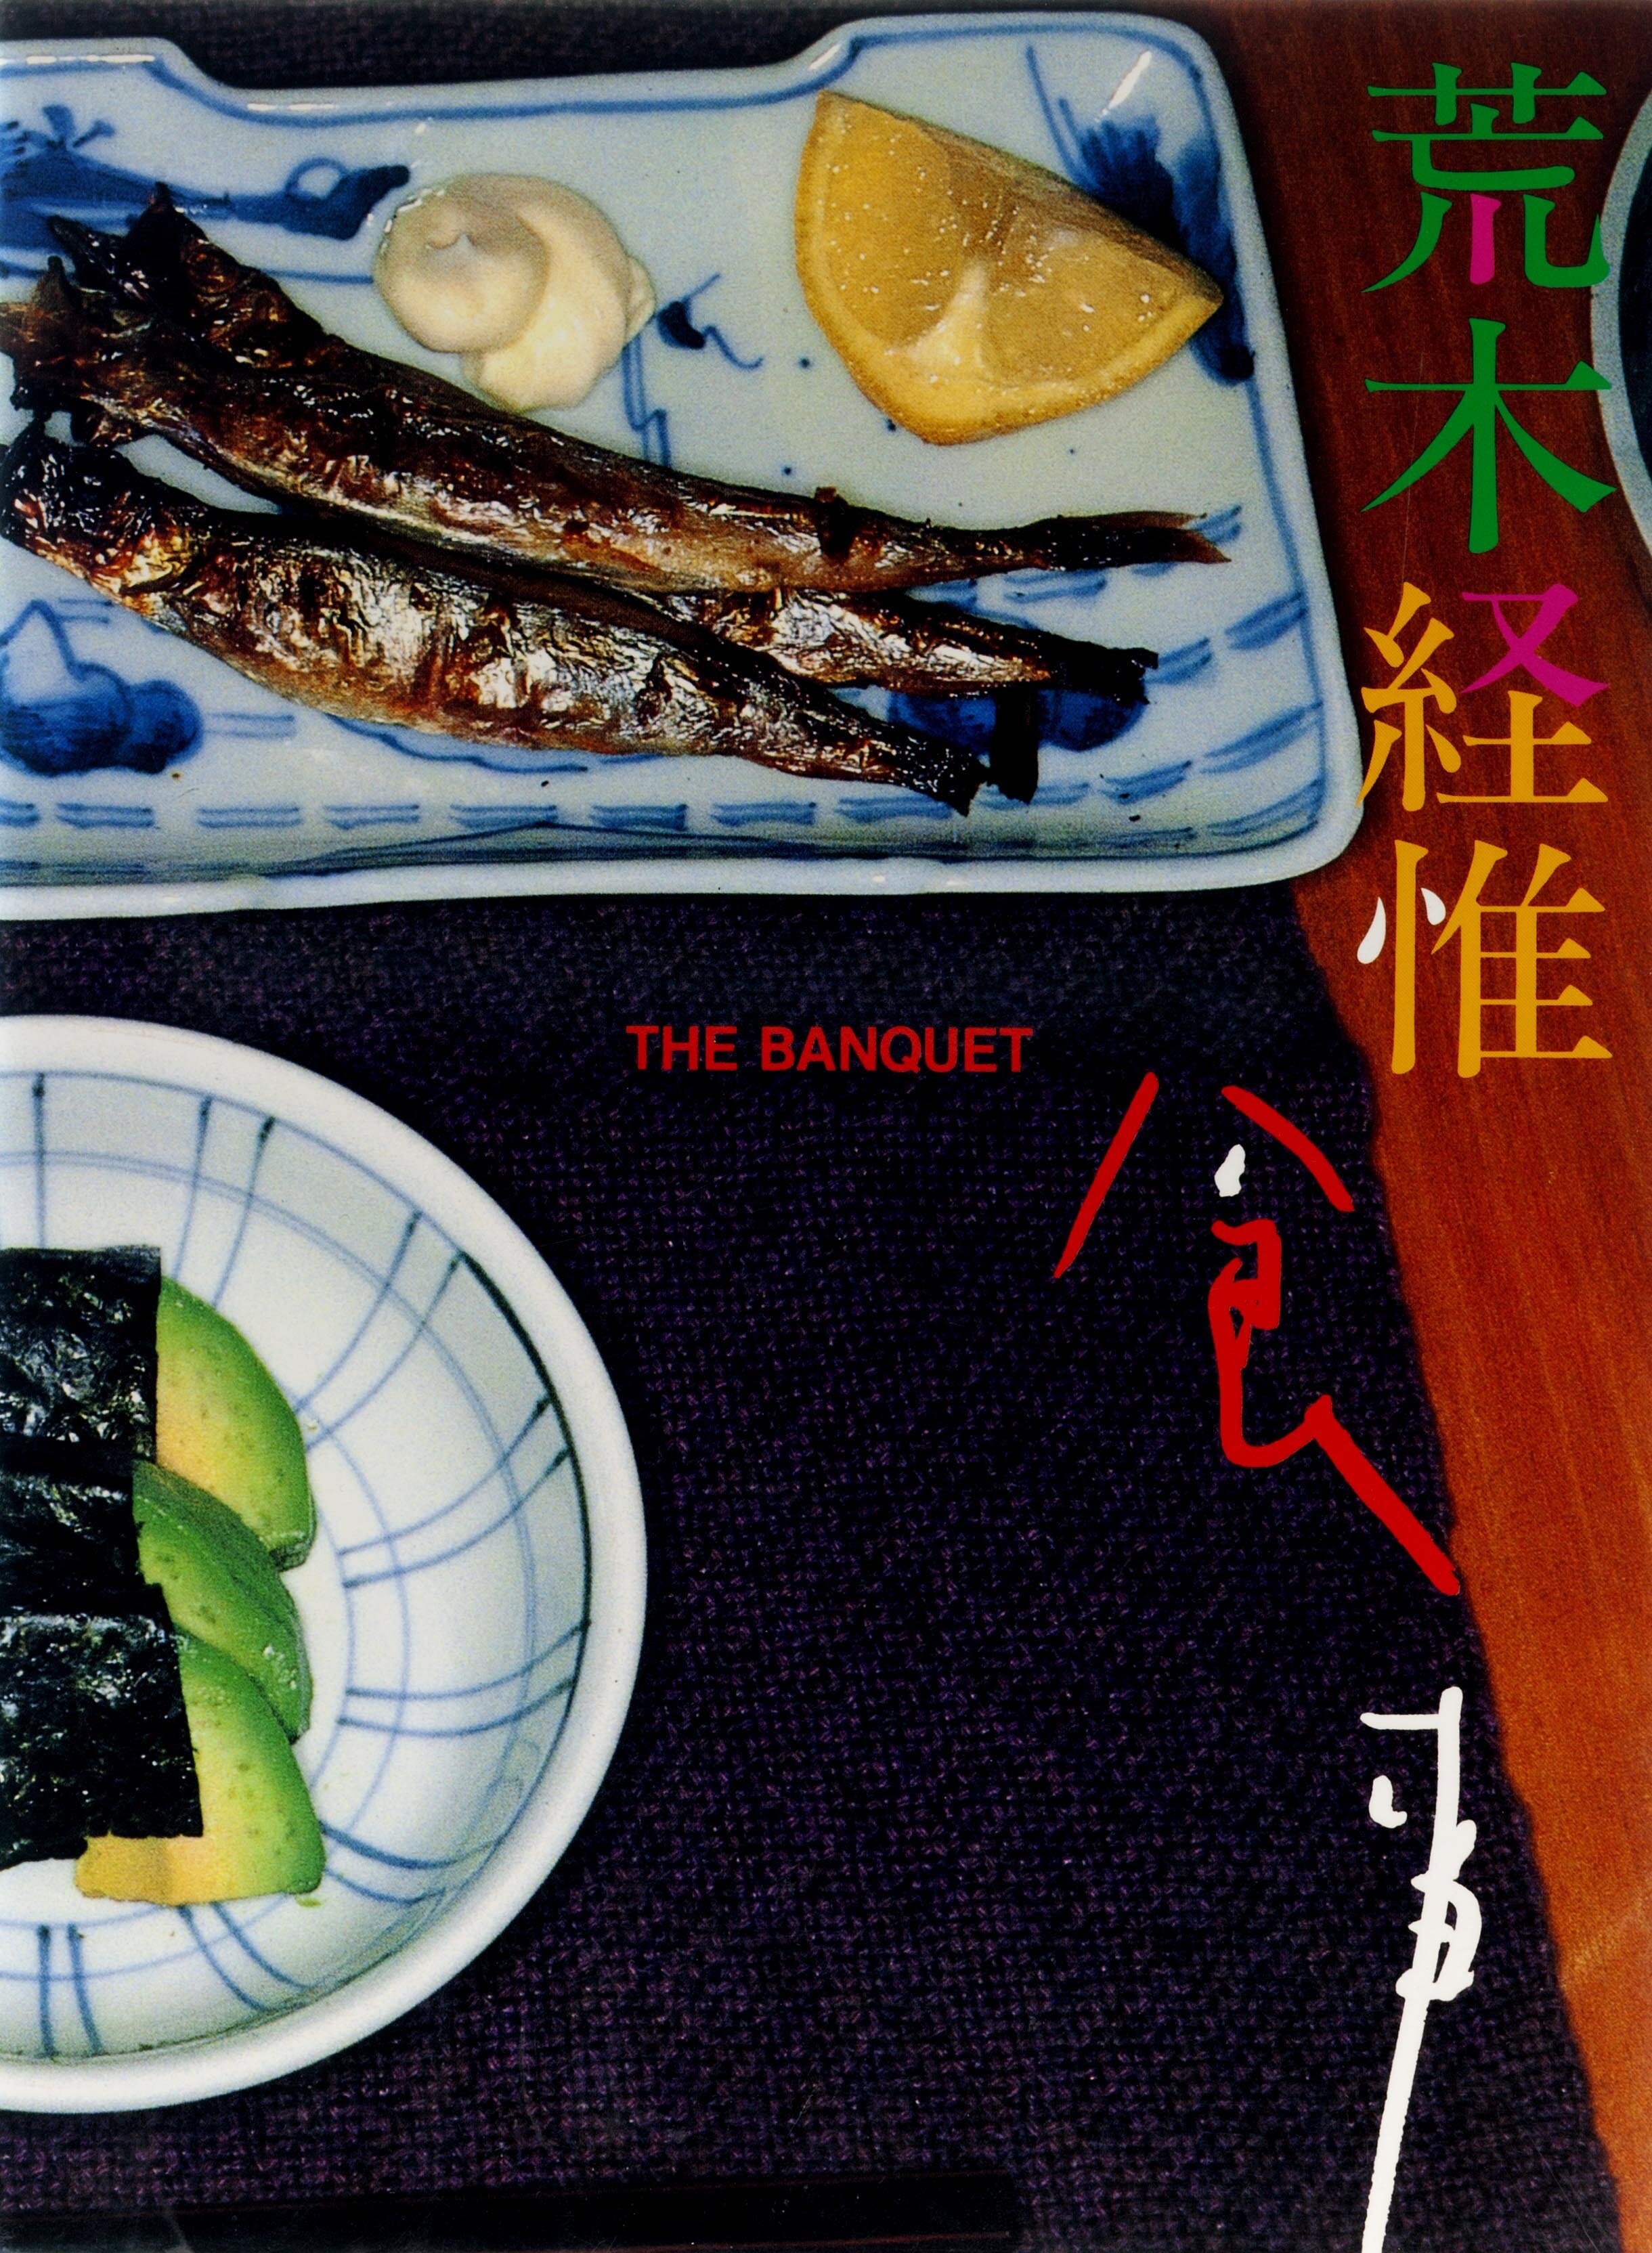 015 The Banquet, 1993 © Nobuyoshi Araki, courtesy Fotosammlung OstLicht